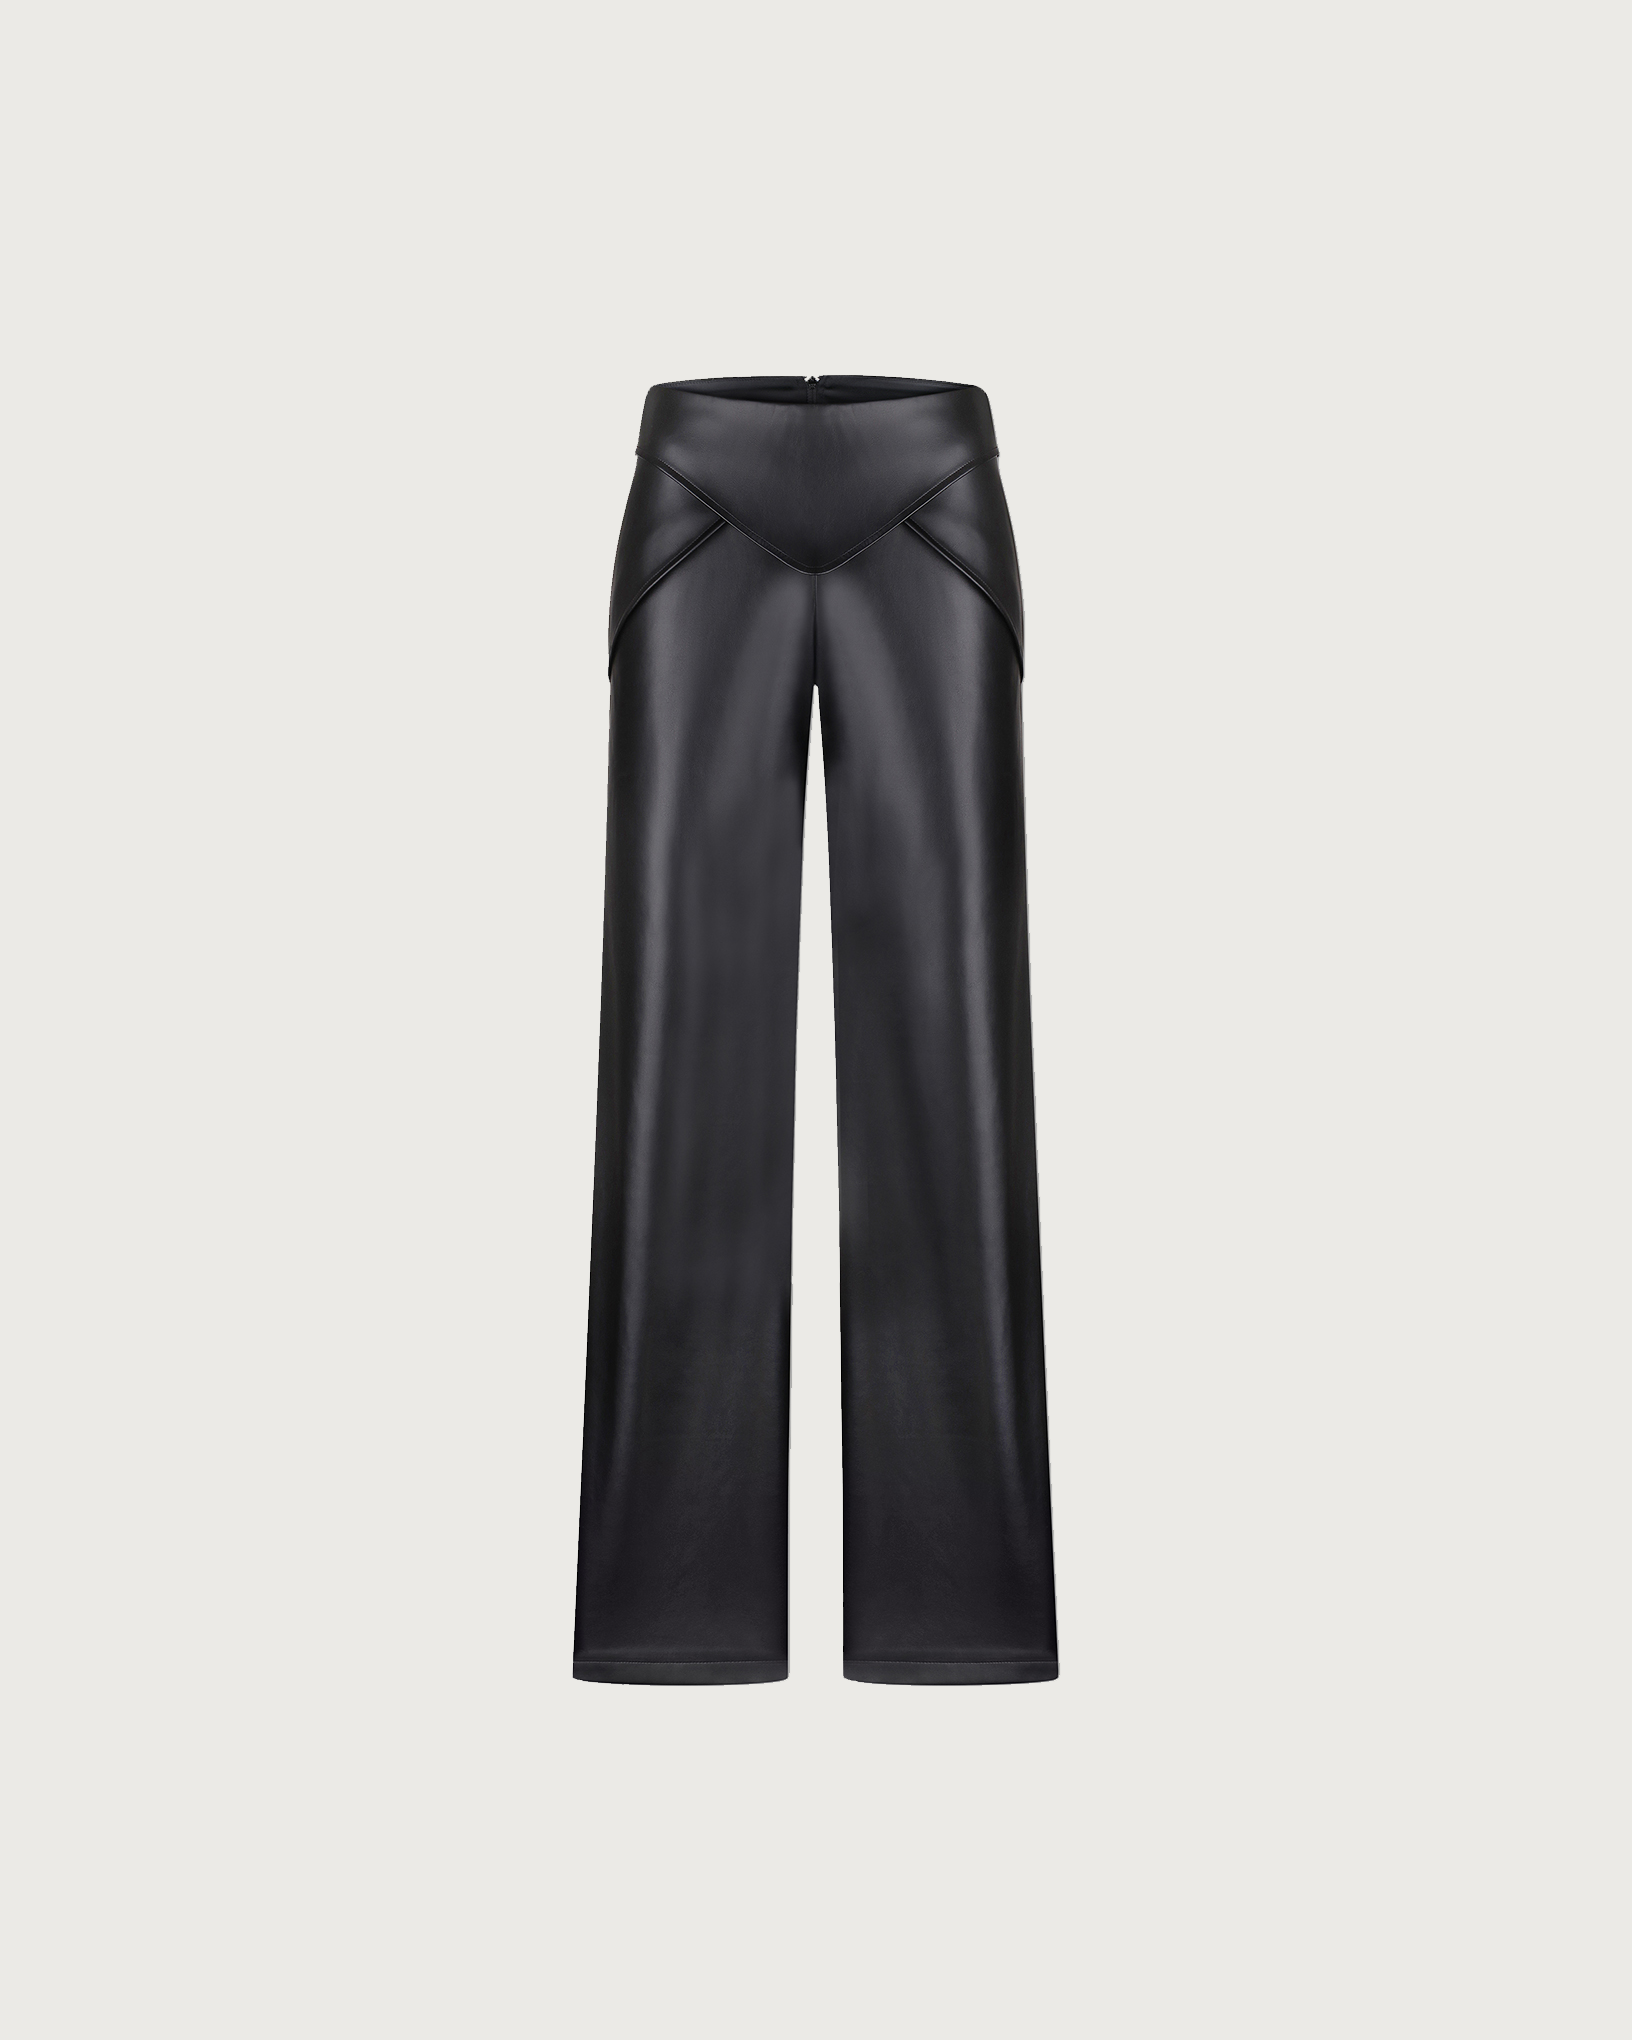 Buy Trousers, 28.00 USD, 1001792012